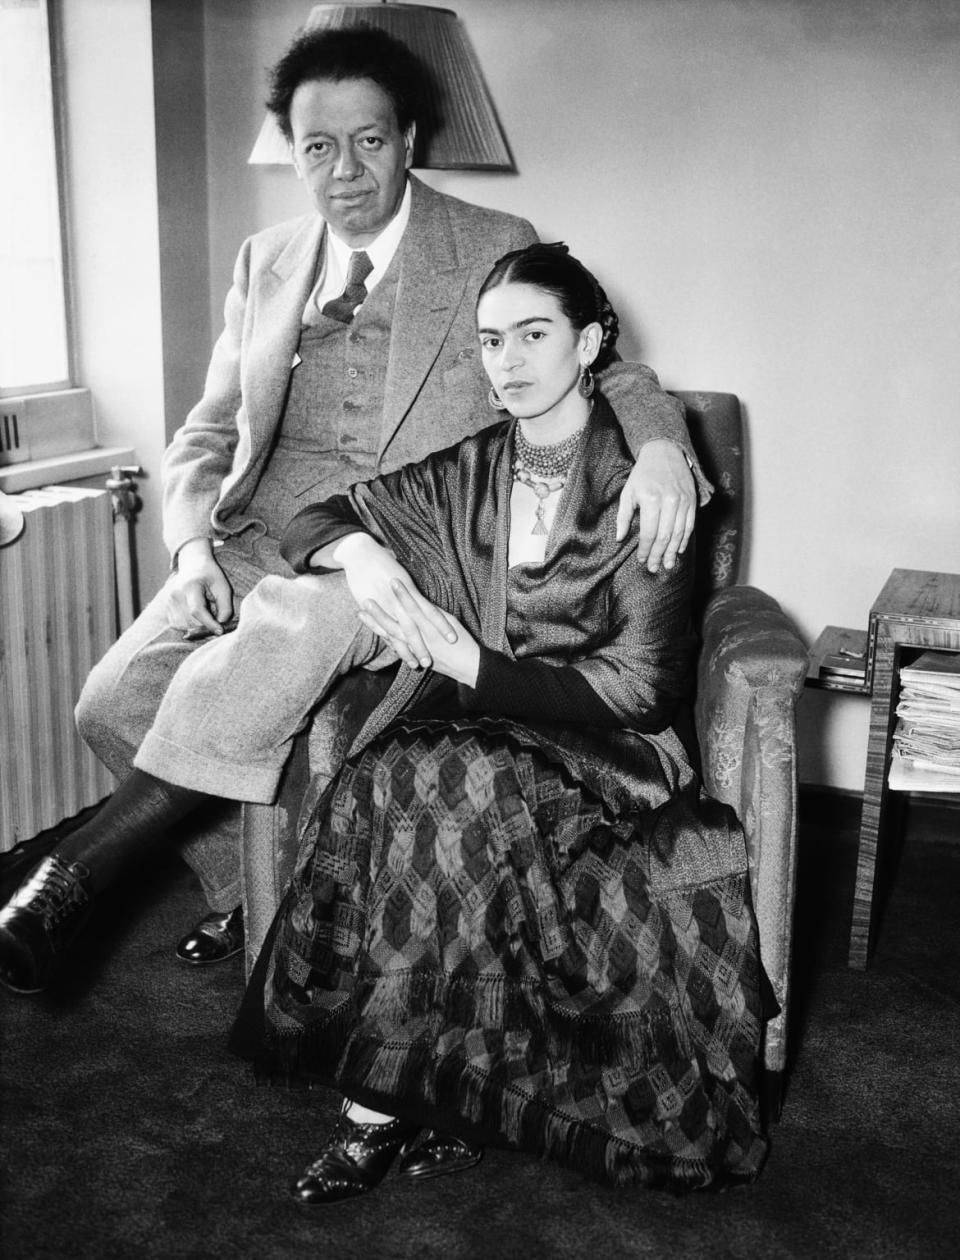 <div class="inline-image__caption"><p>Diego Rivera and Frida Kahlo on December 8, 1939. </p></div> <div class="inline-image__credit">Bettmann/Getty Images</div>